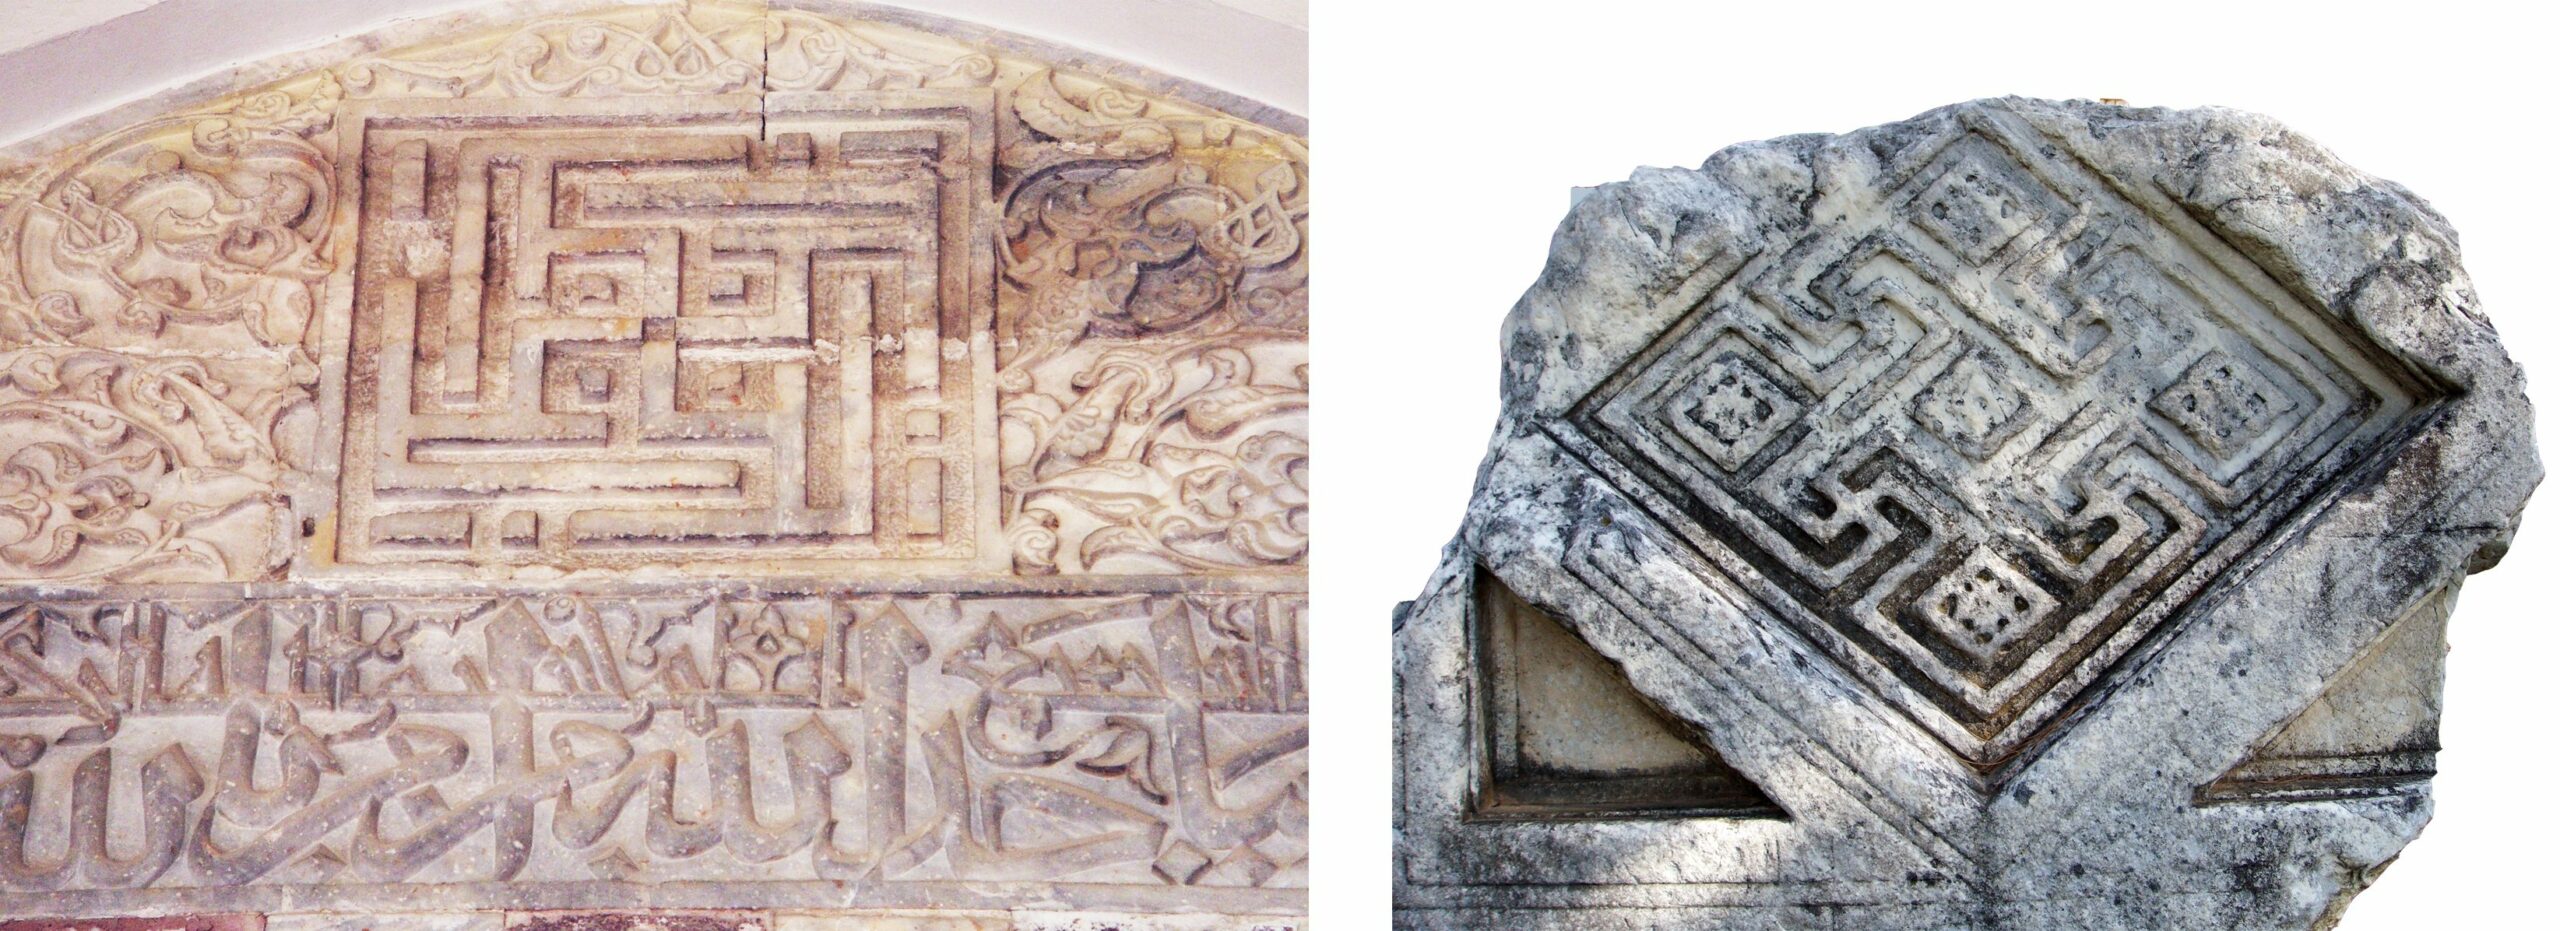 Milas'ta bulunan svastika sembolleri